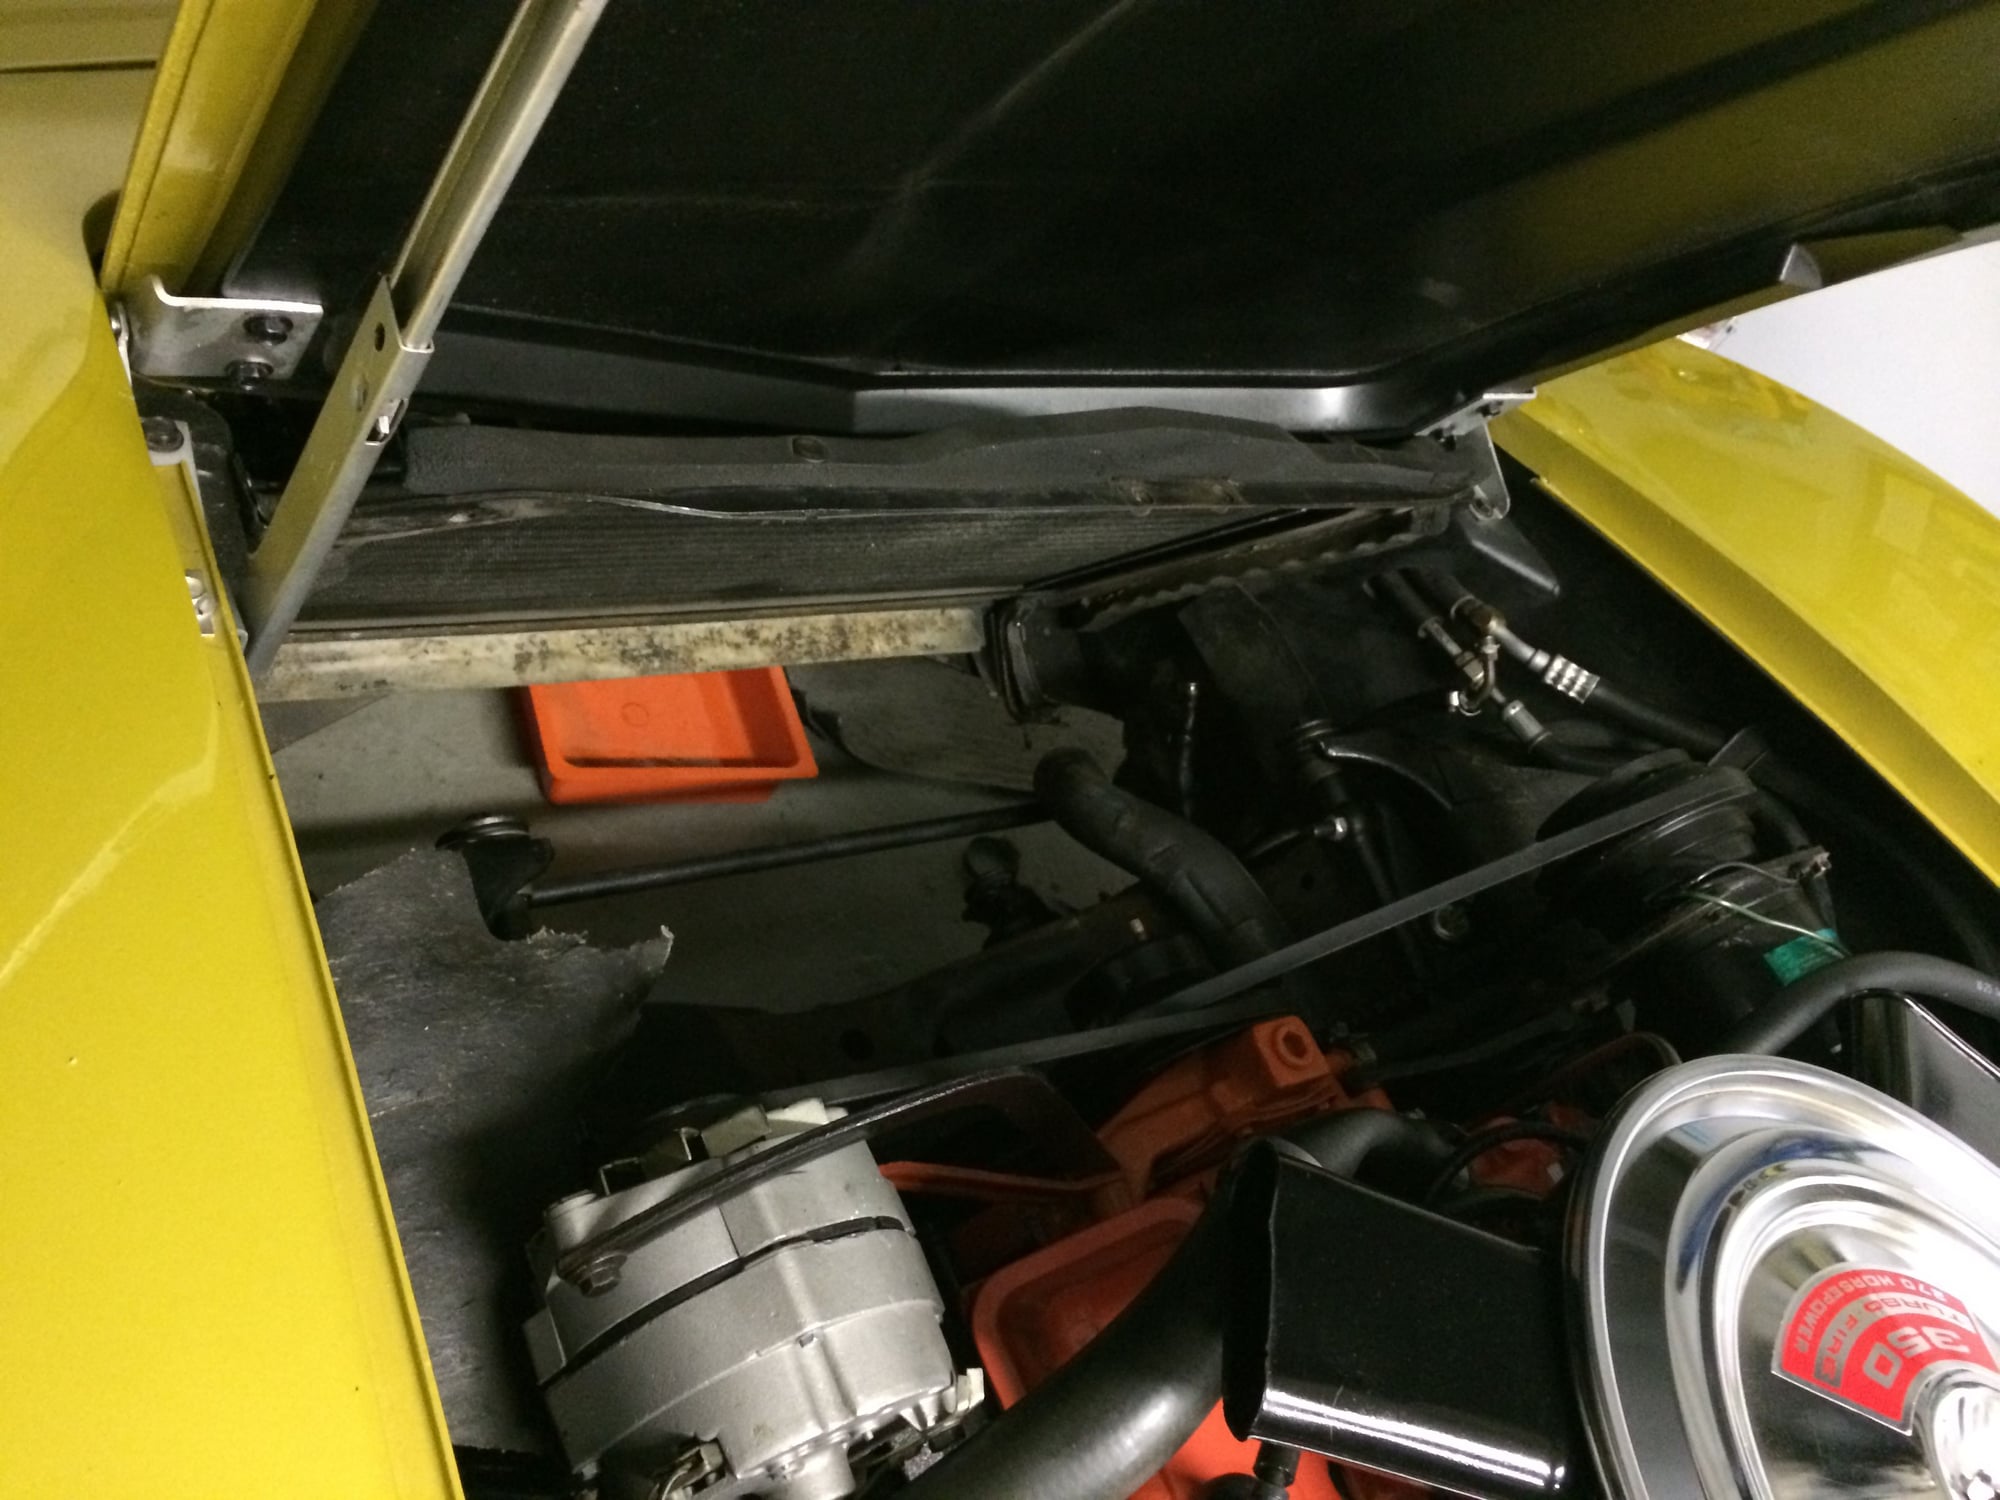 1971 radiator repair and removal. - CorvetteForum - Chevrolet Corvette ...